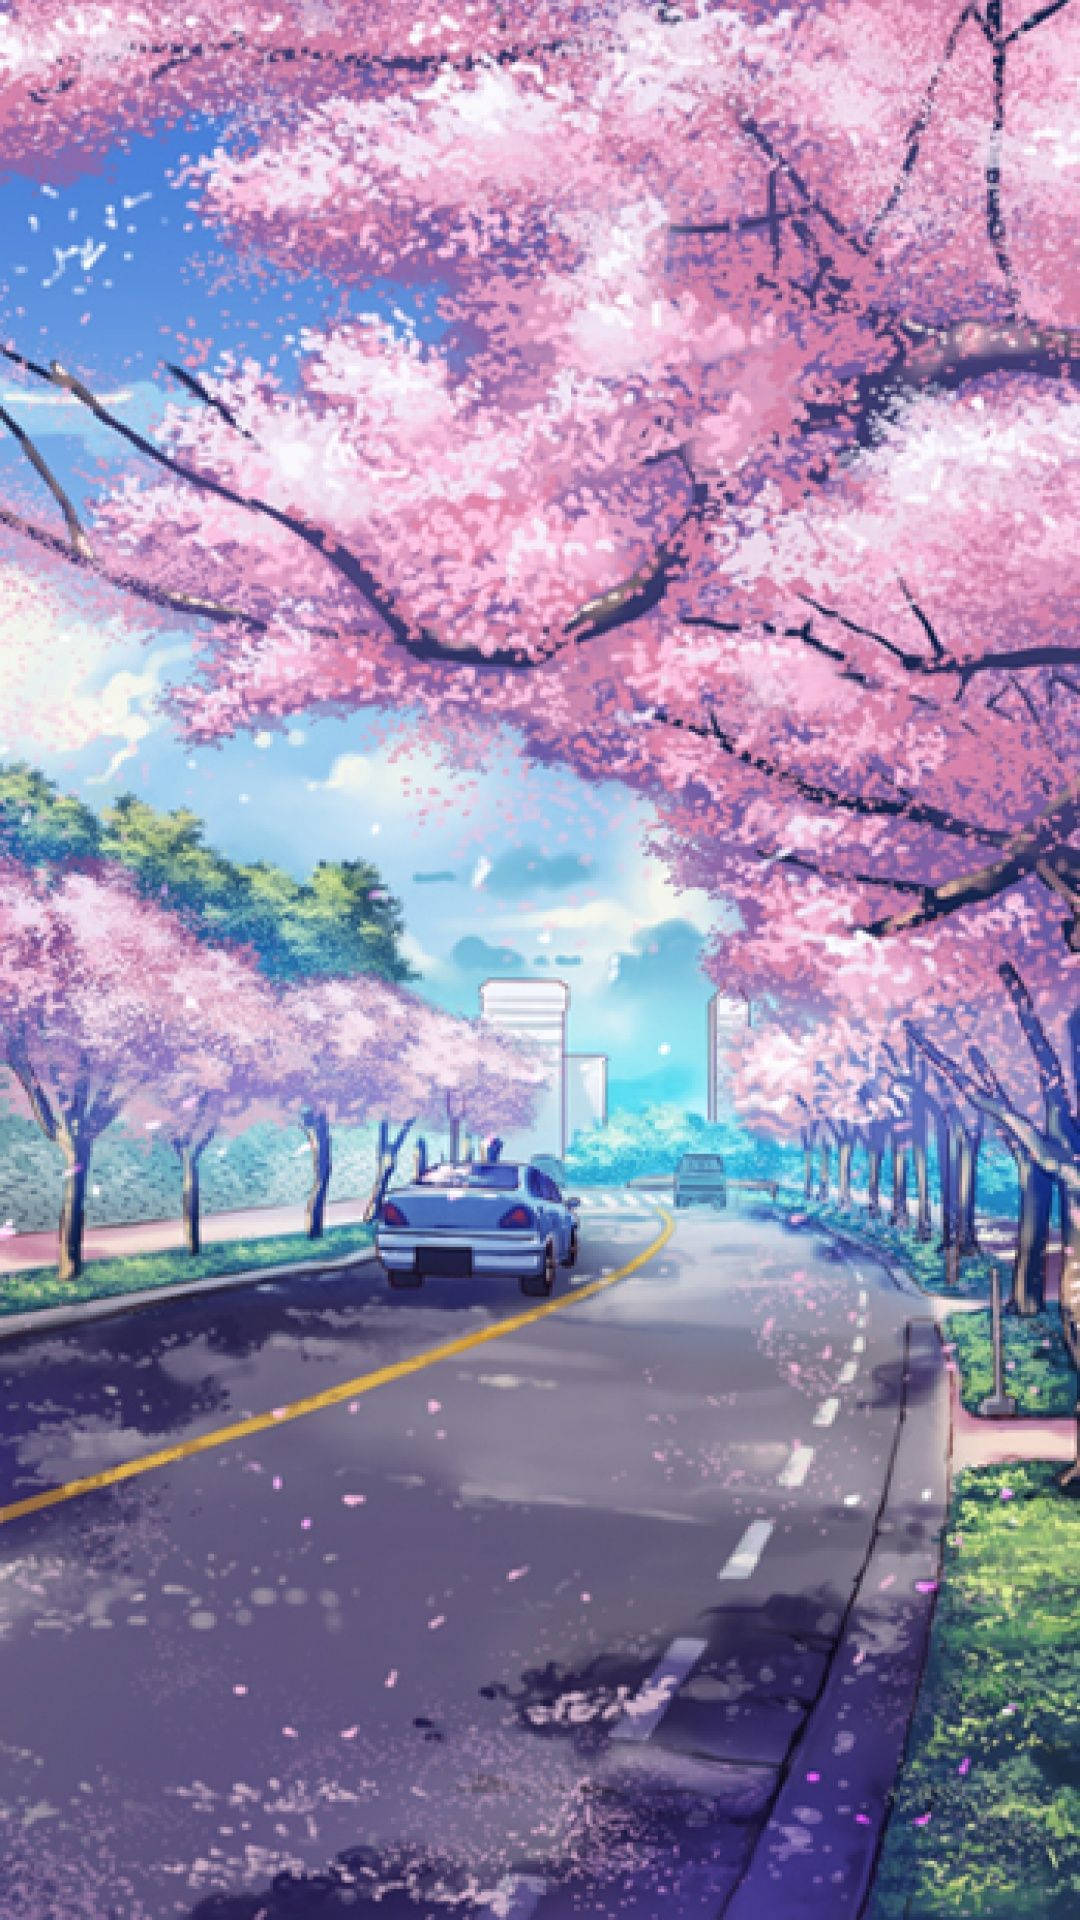 Japanese Aesthetic Iphone Cars Driving With Sakura